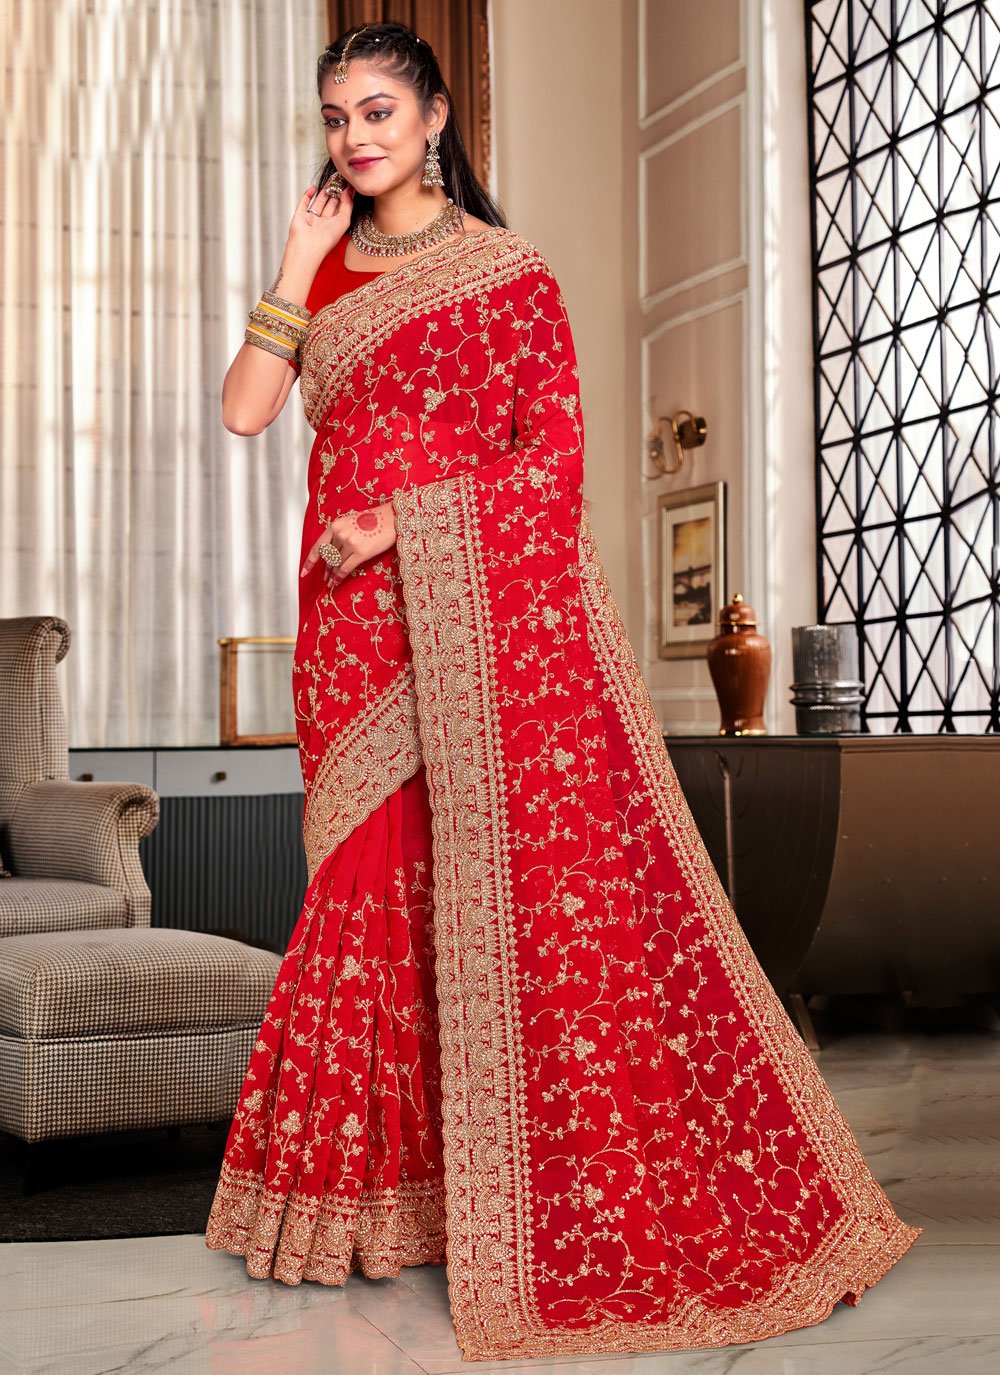 gujrati bride | Indian bridal outfits, Indian bridal dress, Saree wearing  styles